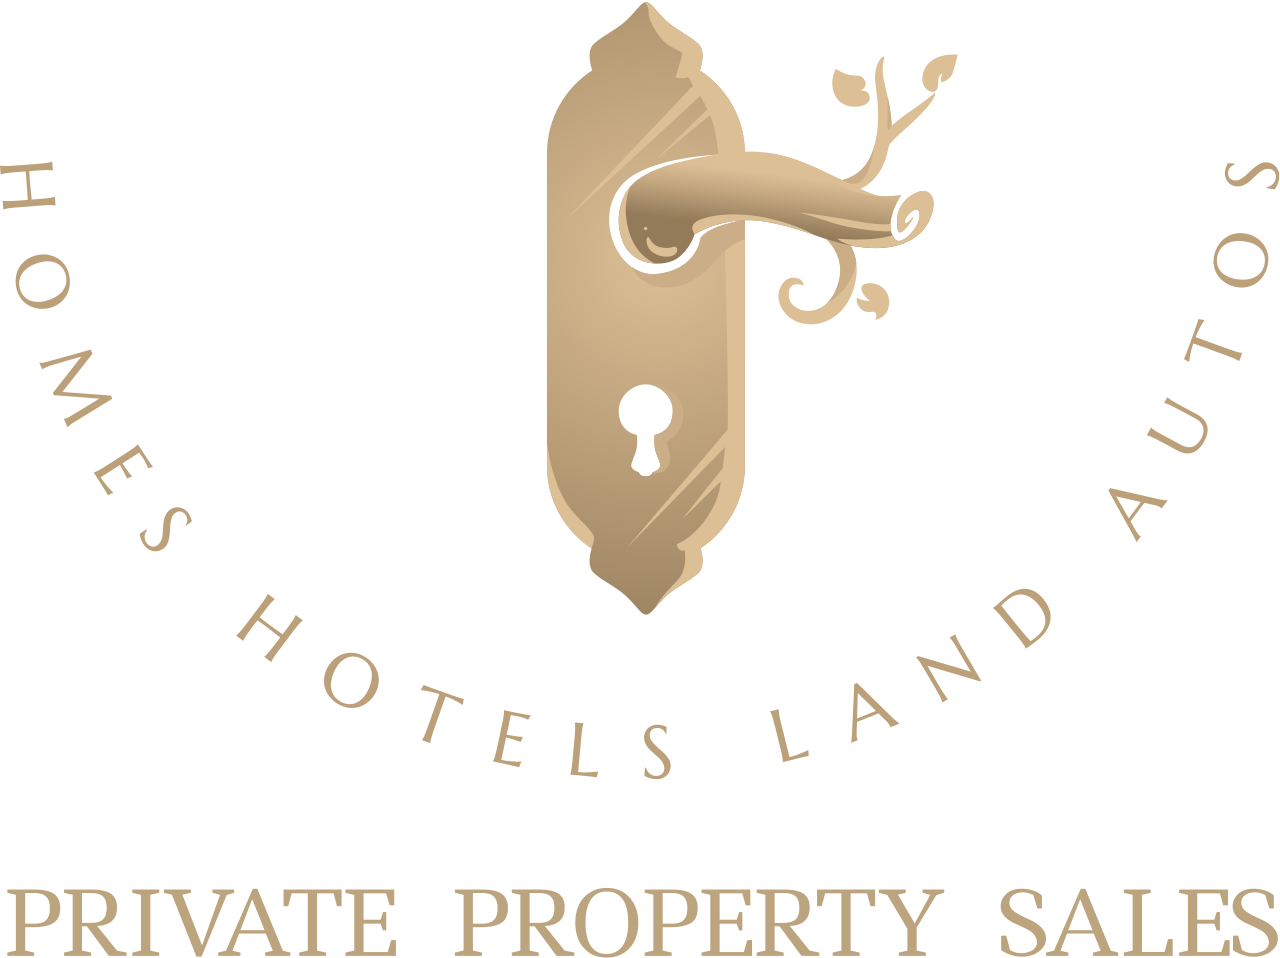  Private Property Sales's logo